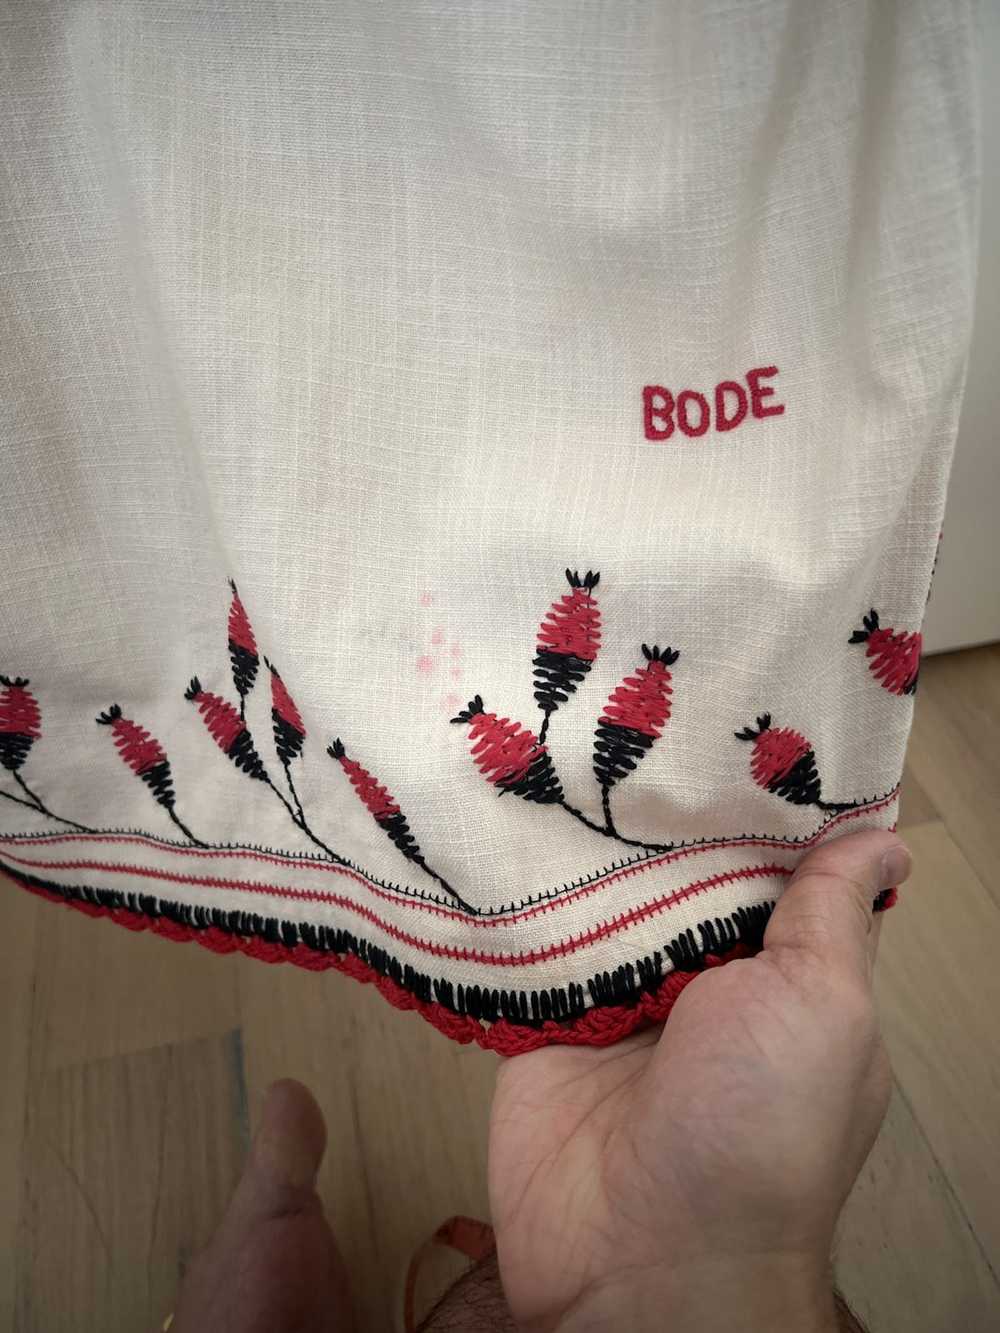 Bode Bode Long-Sleeve Patterned+embroidered shirt - image 4